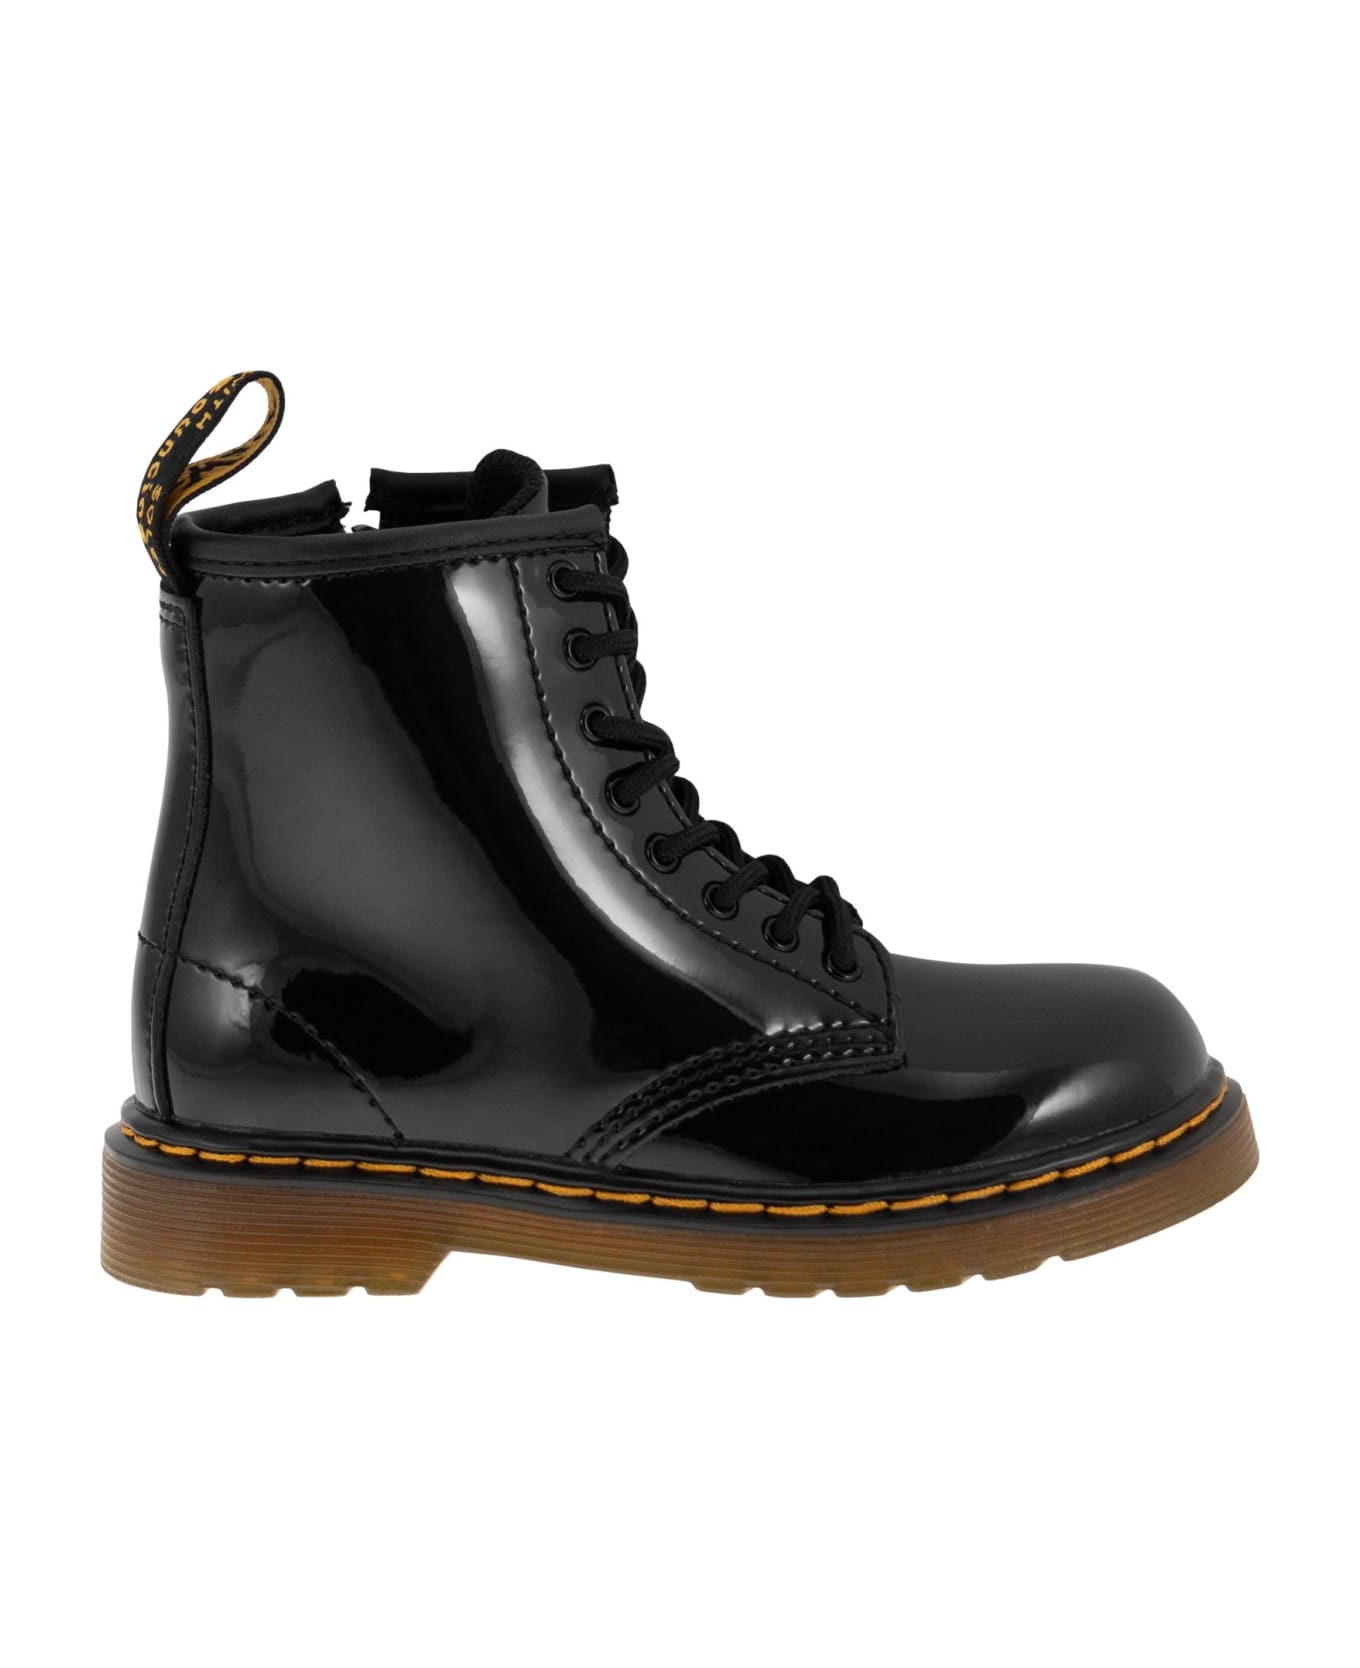 Dr. Martens 1460 - Patent Leather Lace-up Boots - Black